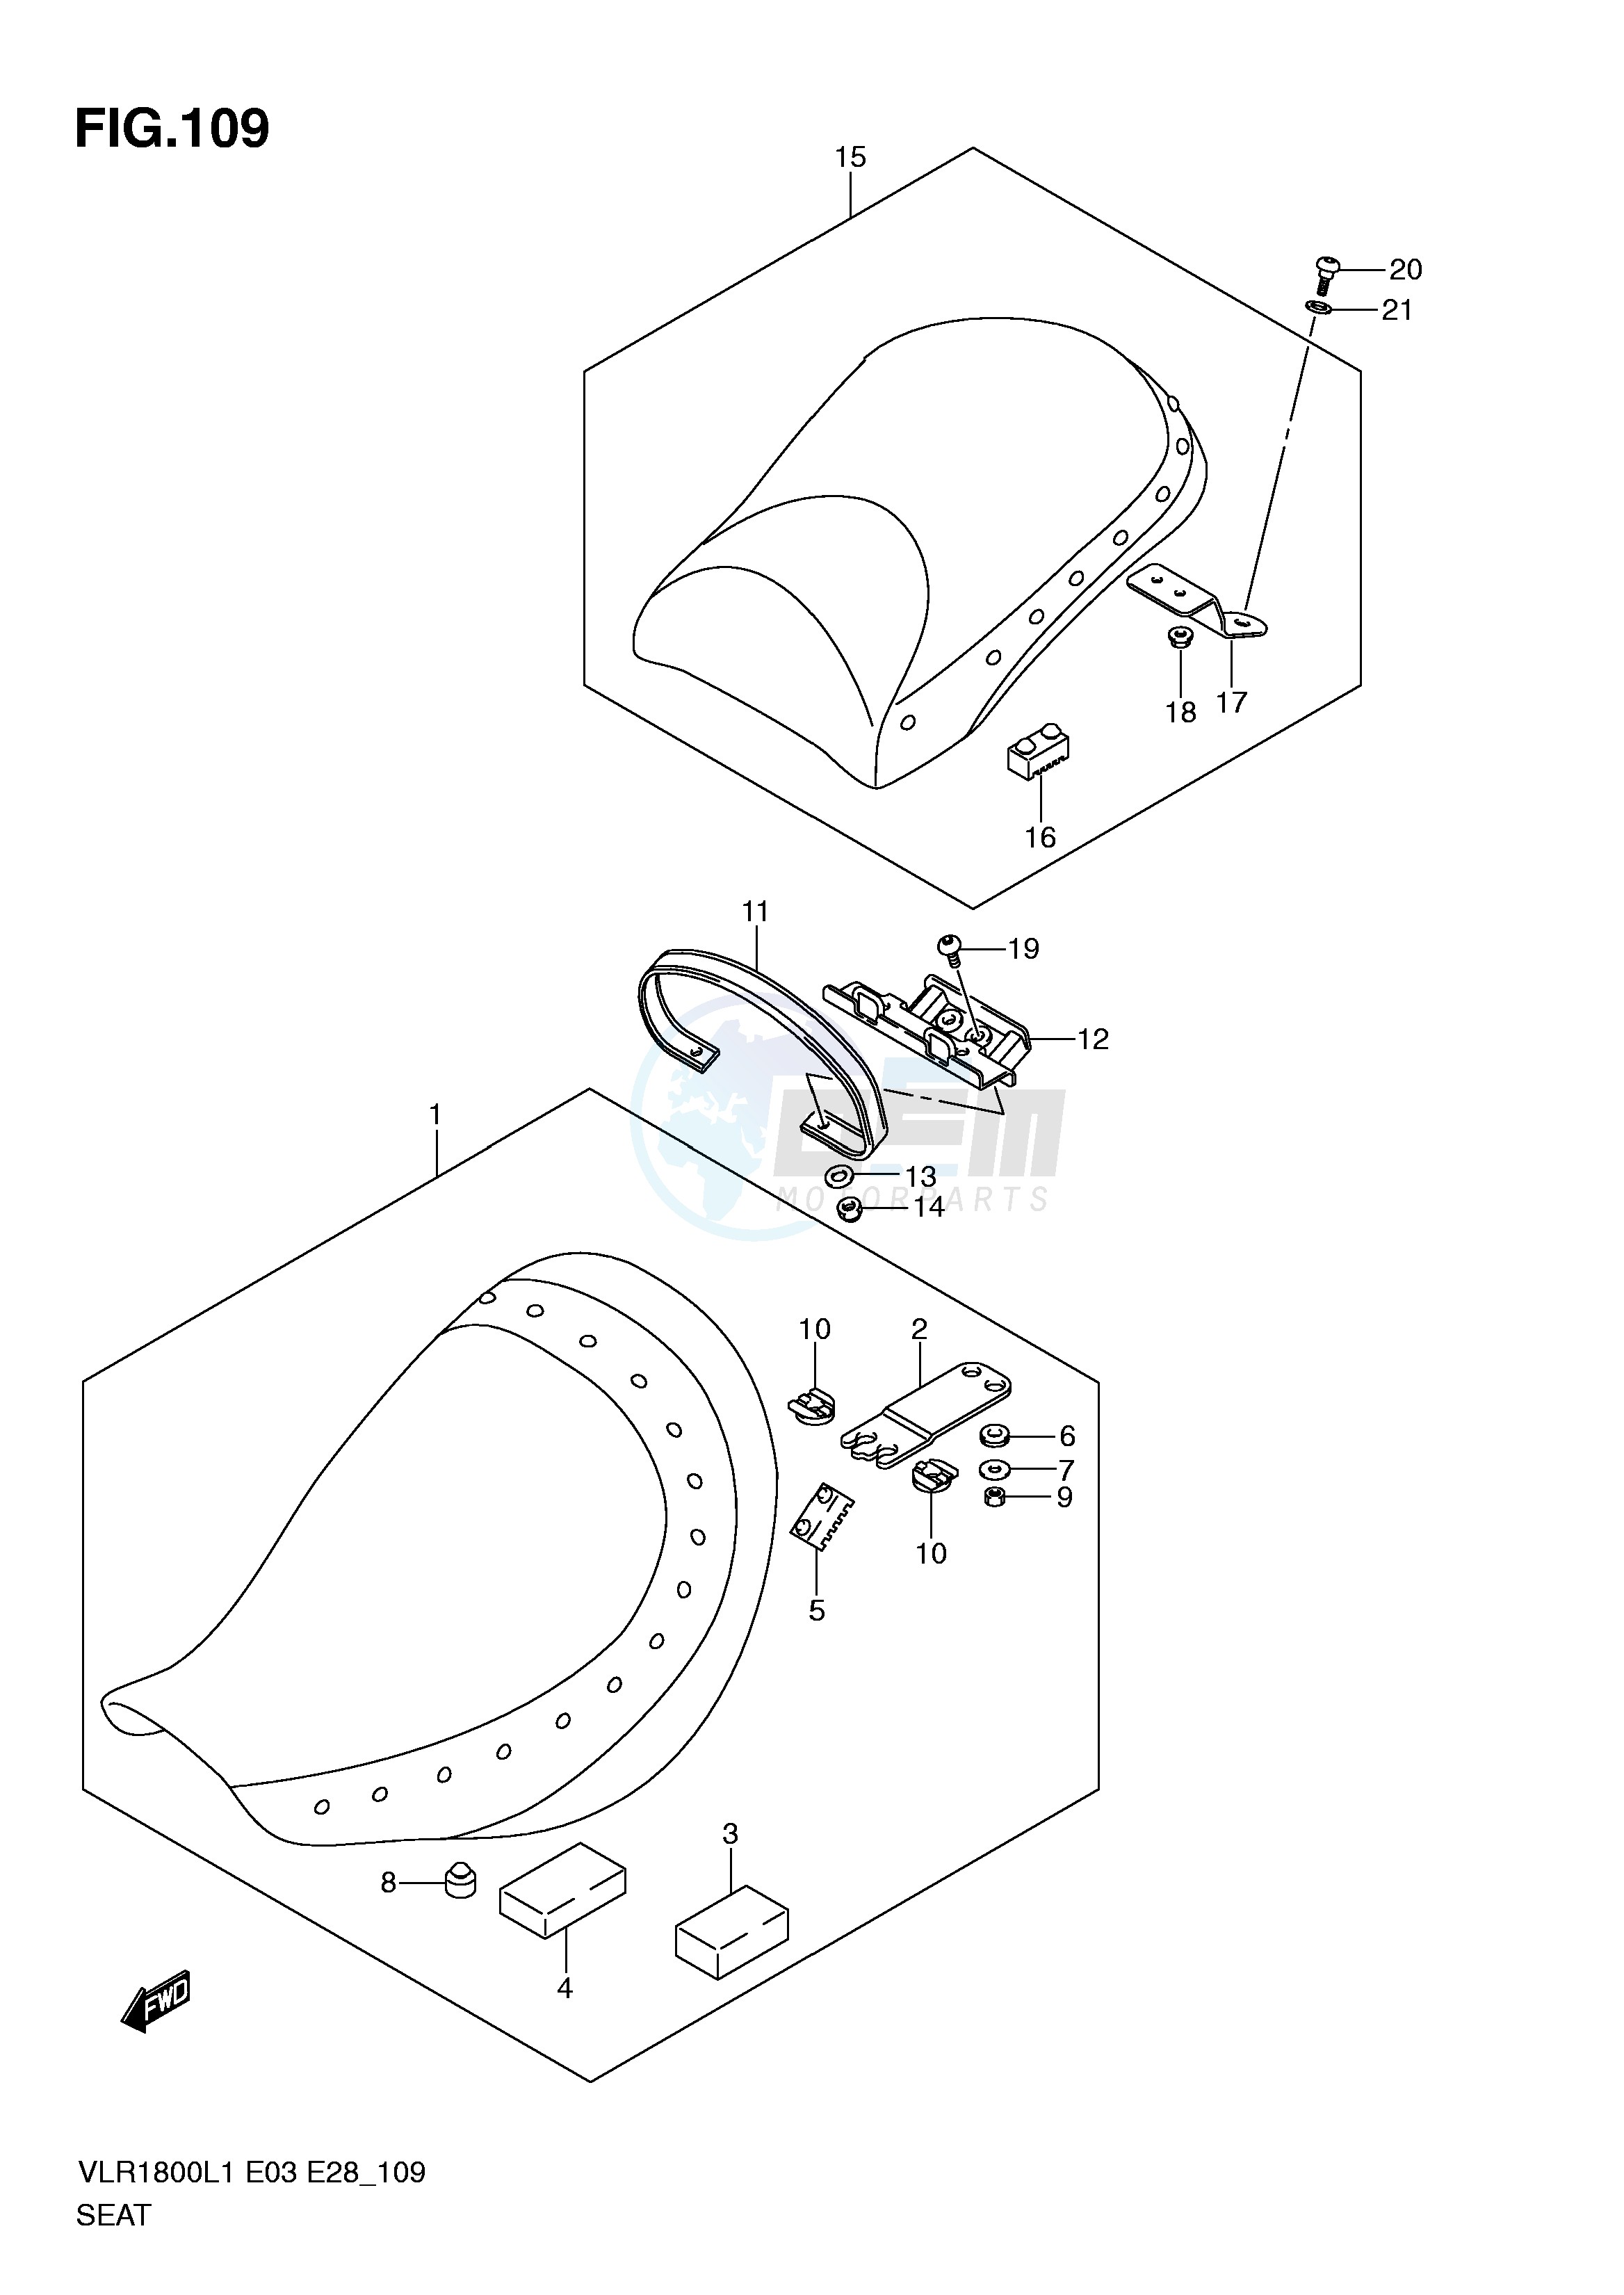 SEAT (VLR1800TL1 E28) blueprint